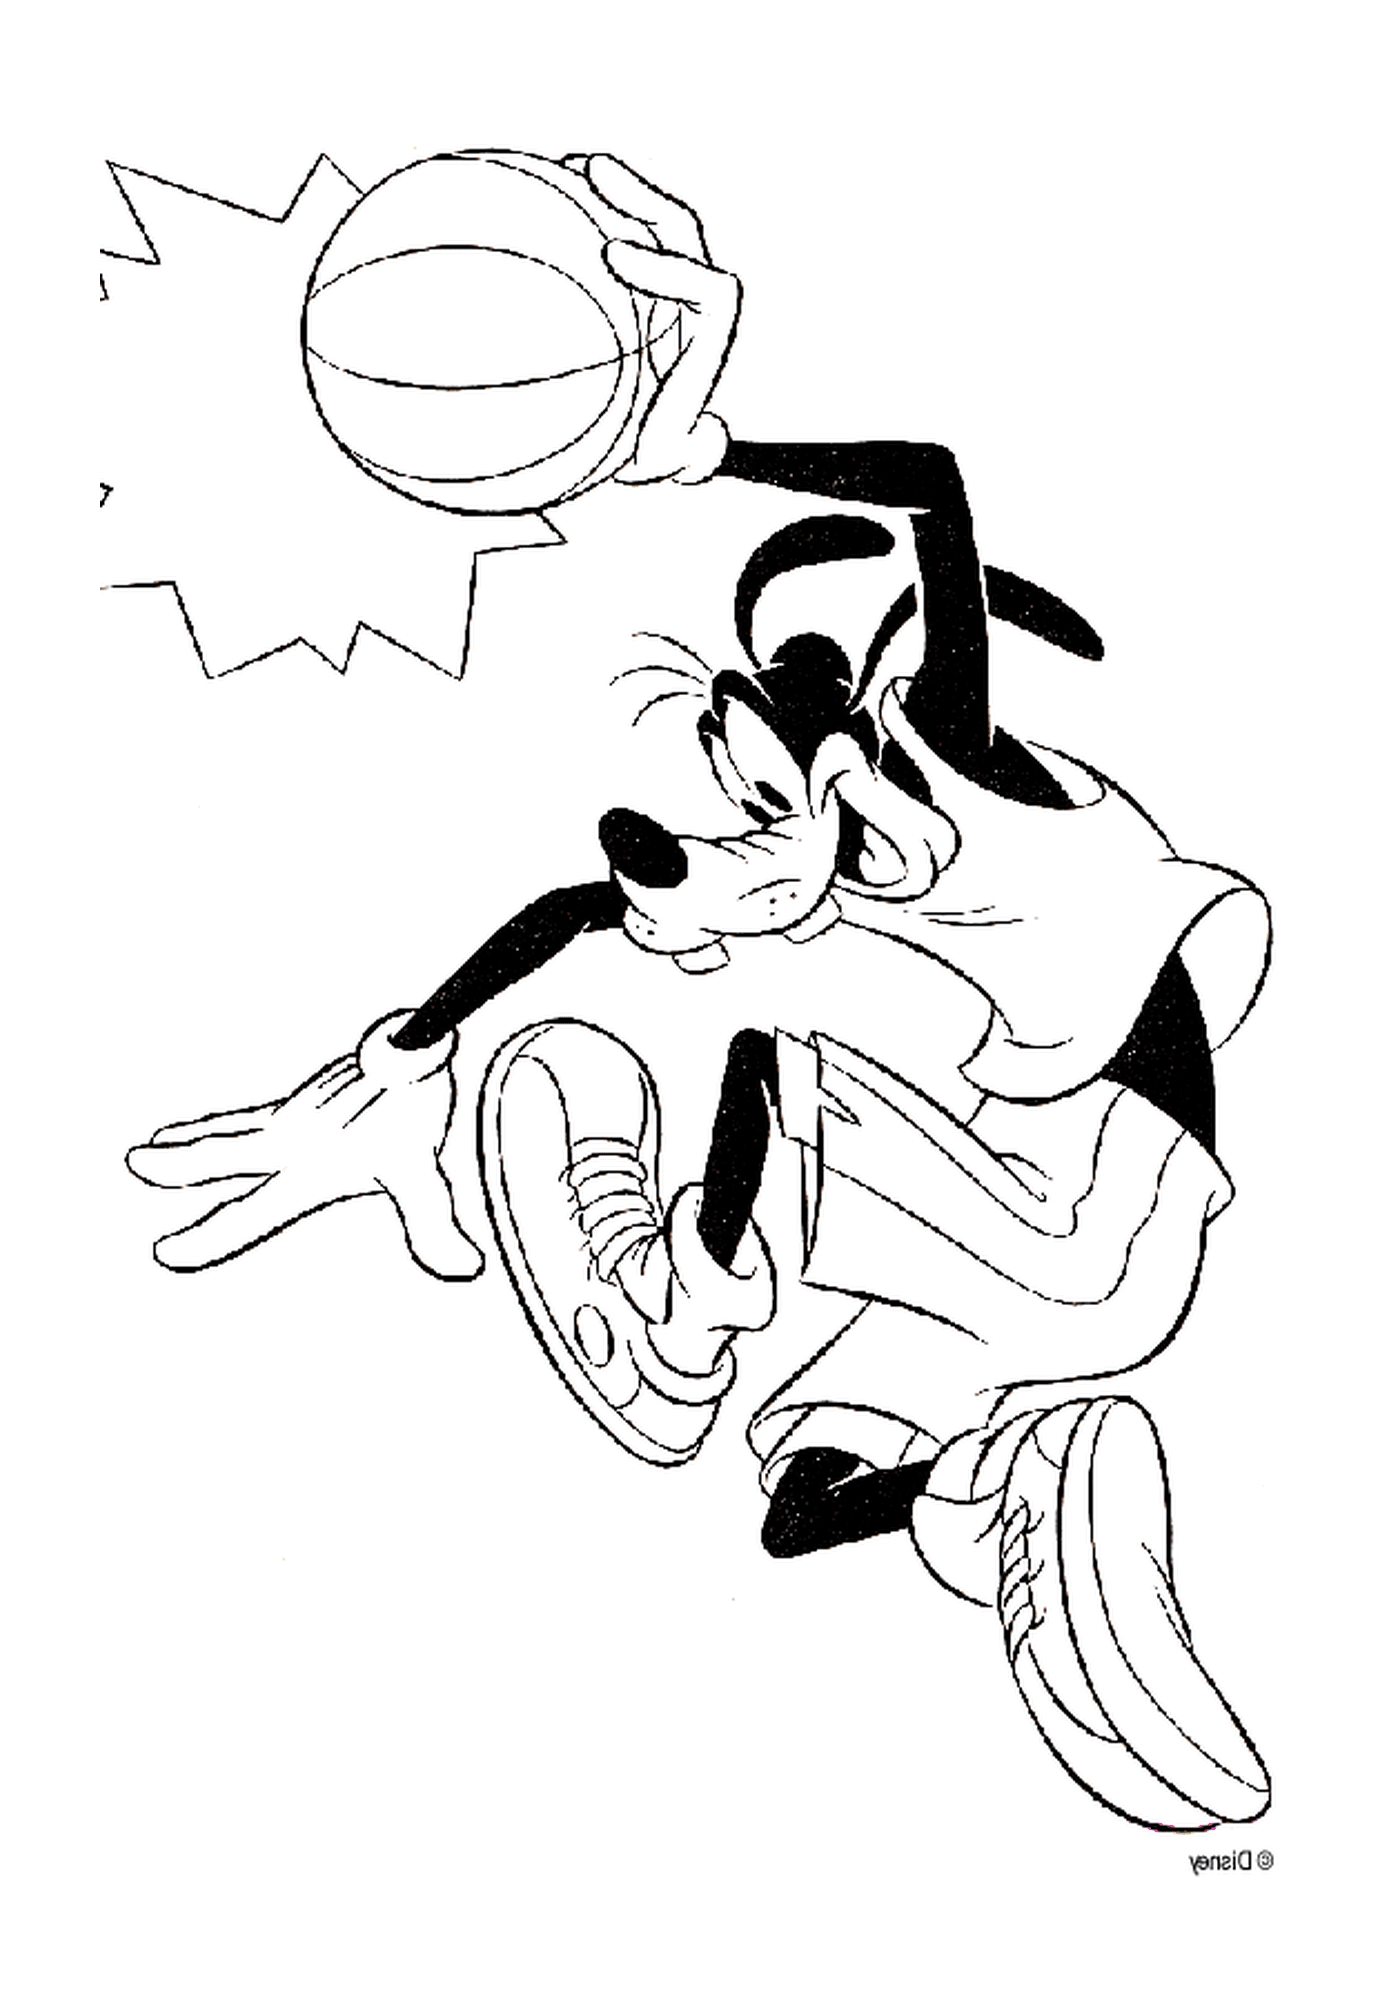  Dingo juega al baloncesto con una pelota 